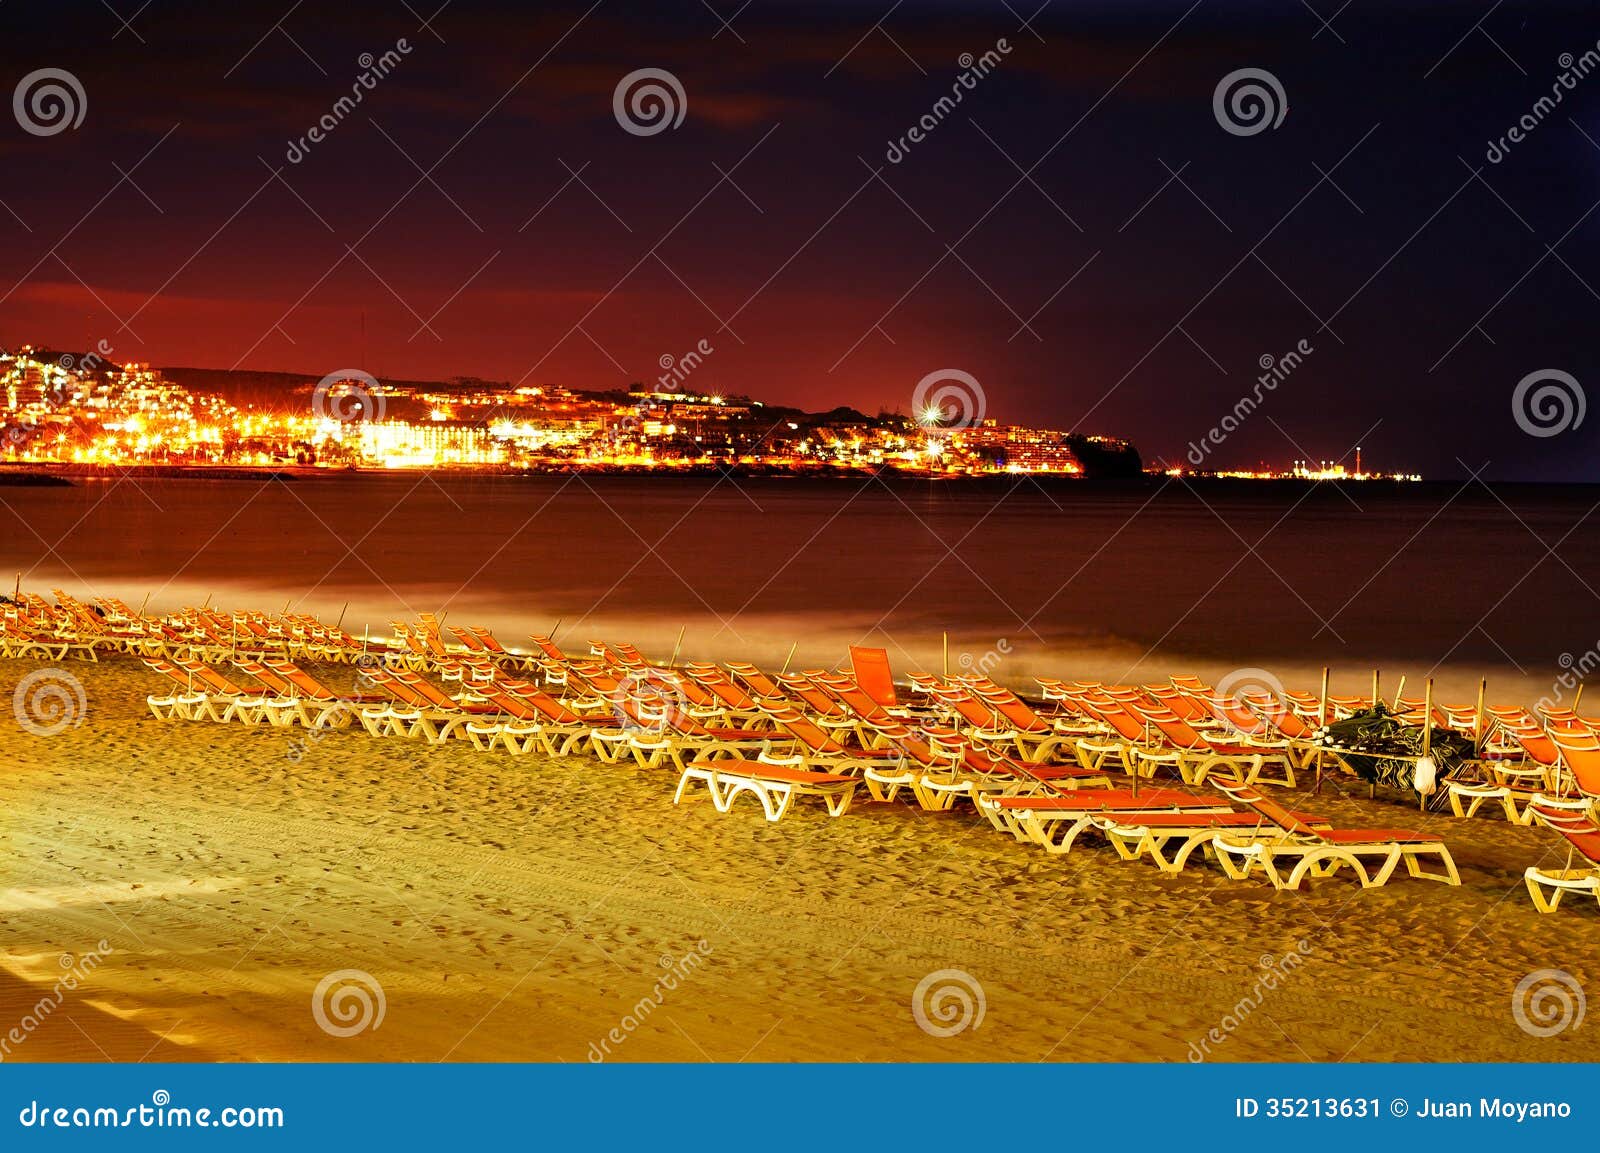 playa del ingles beach at night in maspalomas, gran canaria, spa